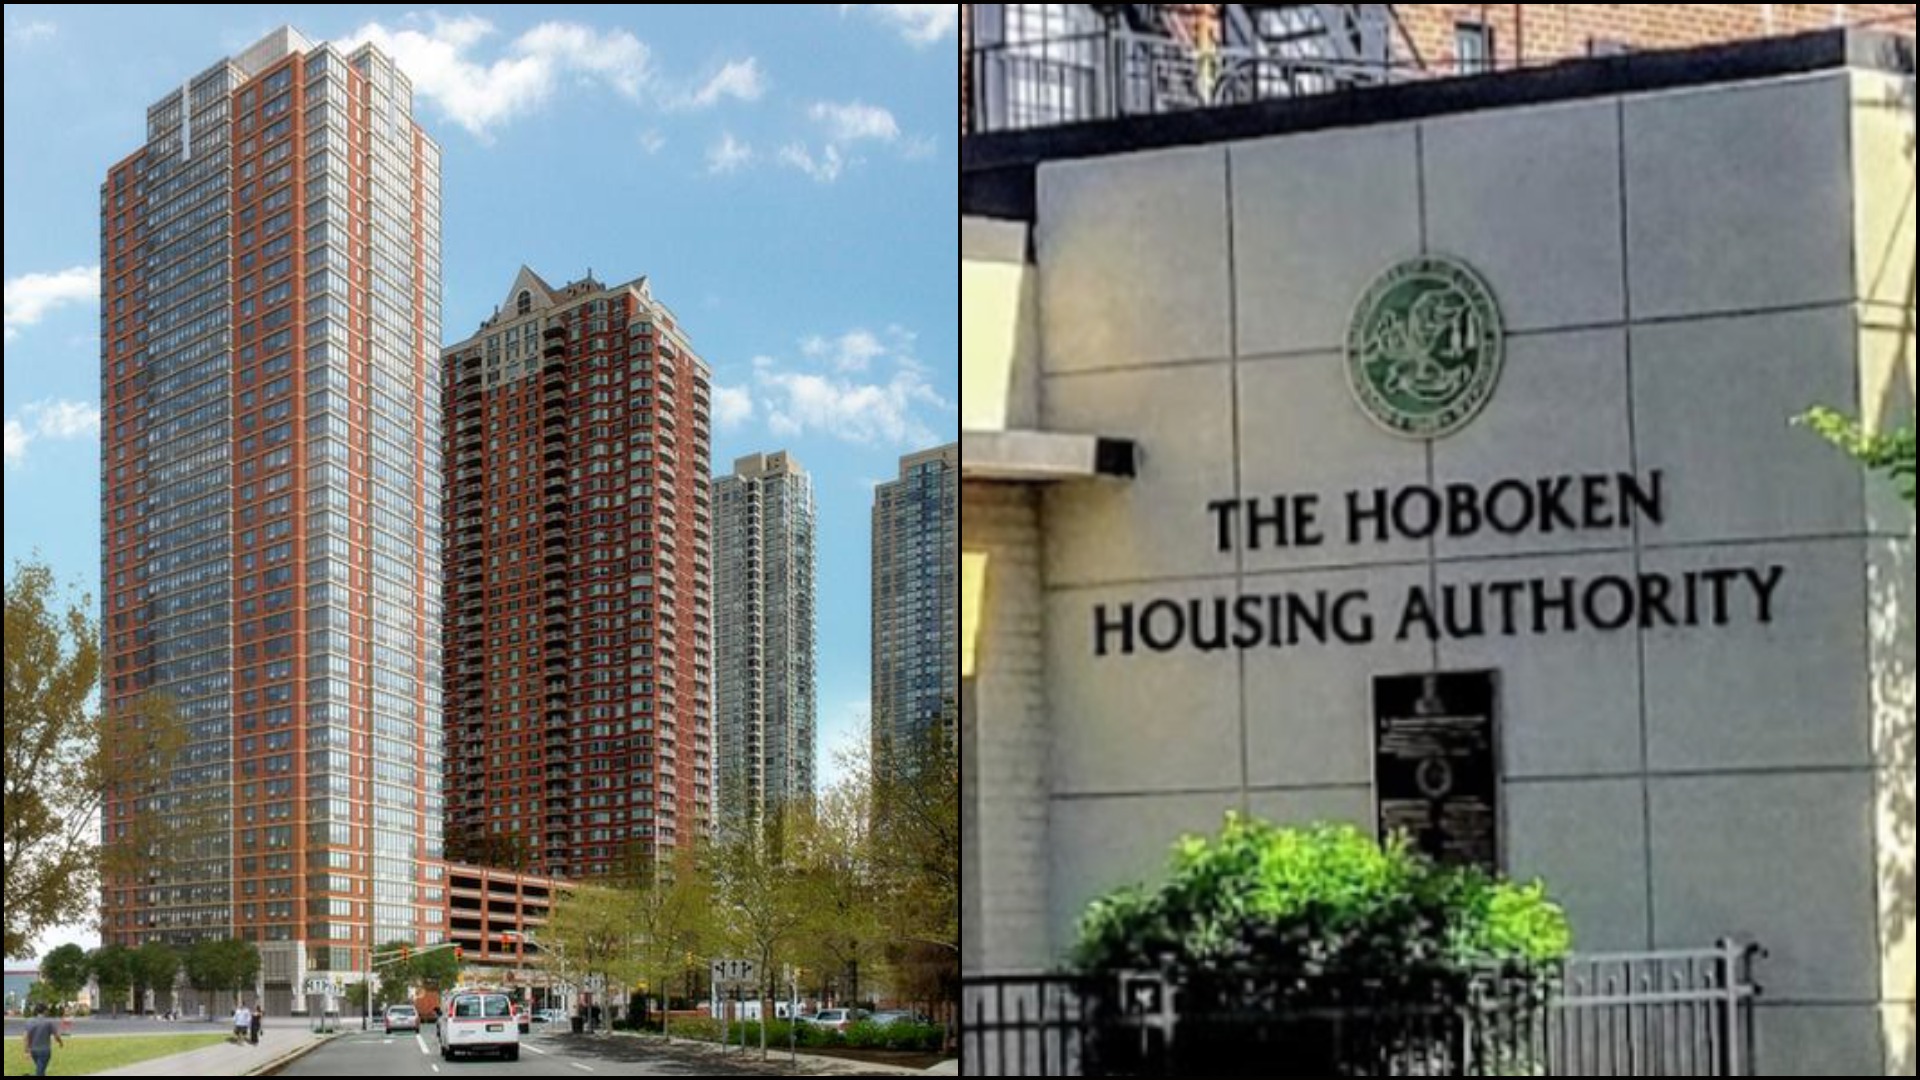 Global Luxury Suites Jersey City - Hoboken Housing Authority